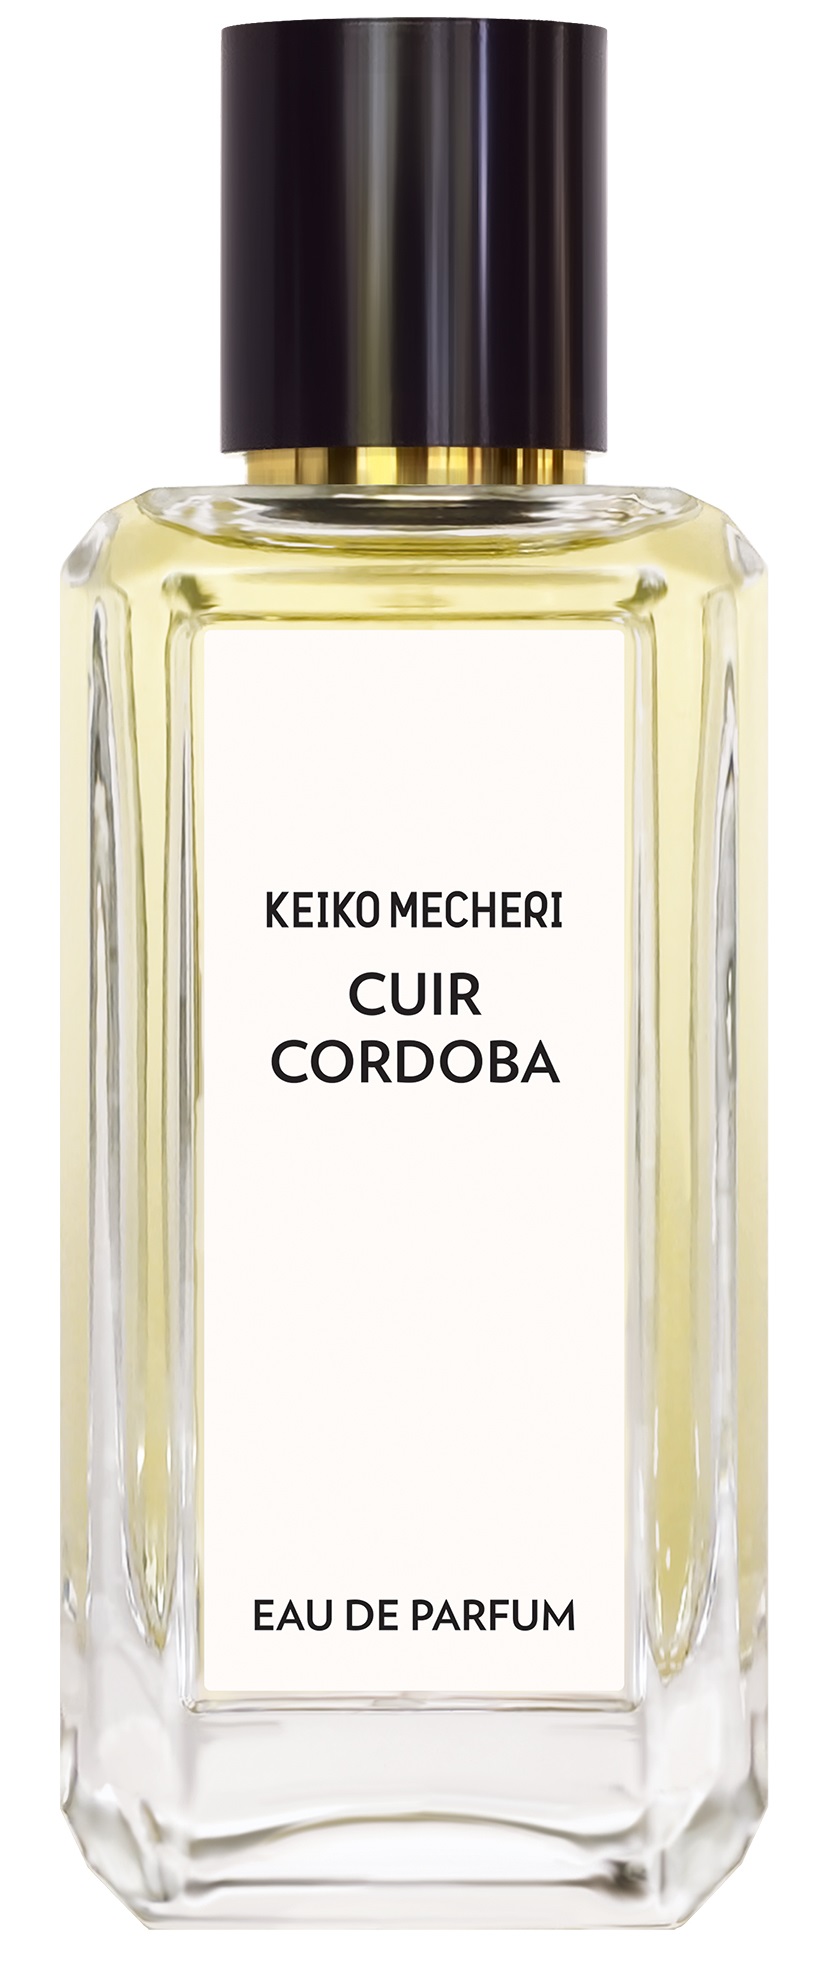 Keiko Mecheri Cuir Cordoba edp 100 ml.